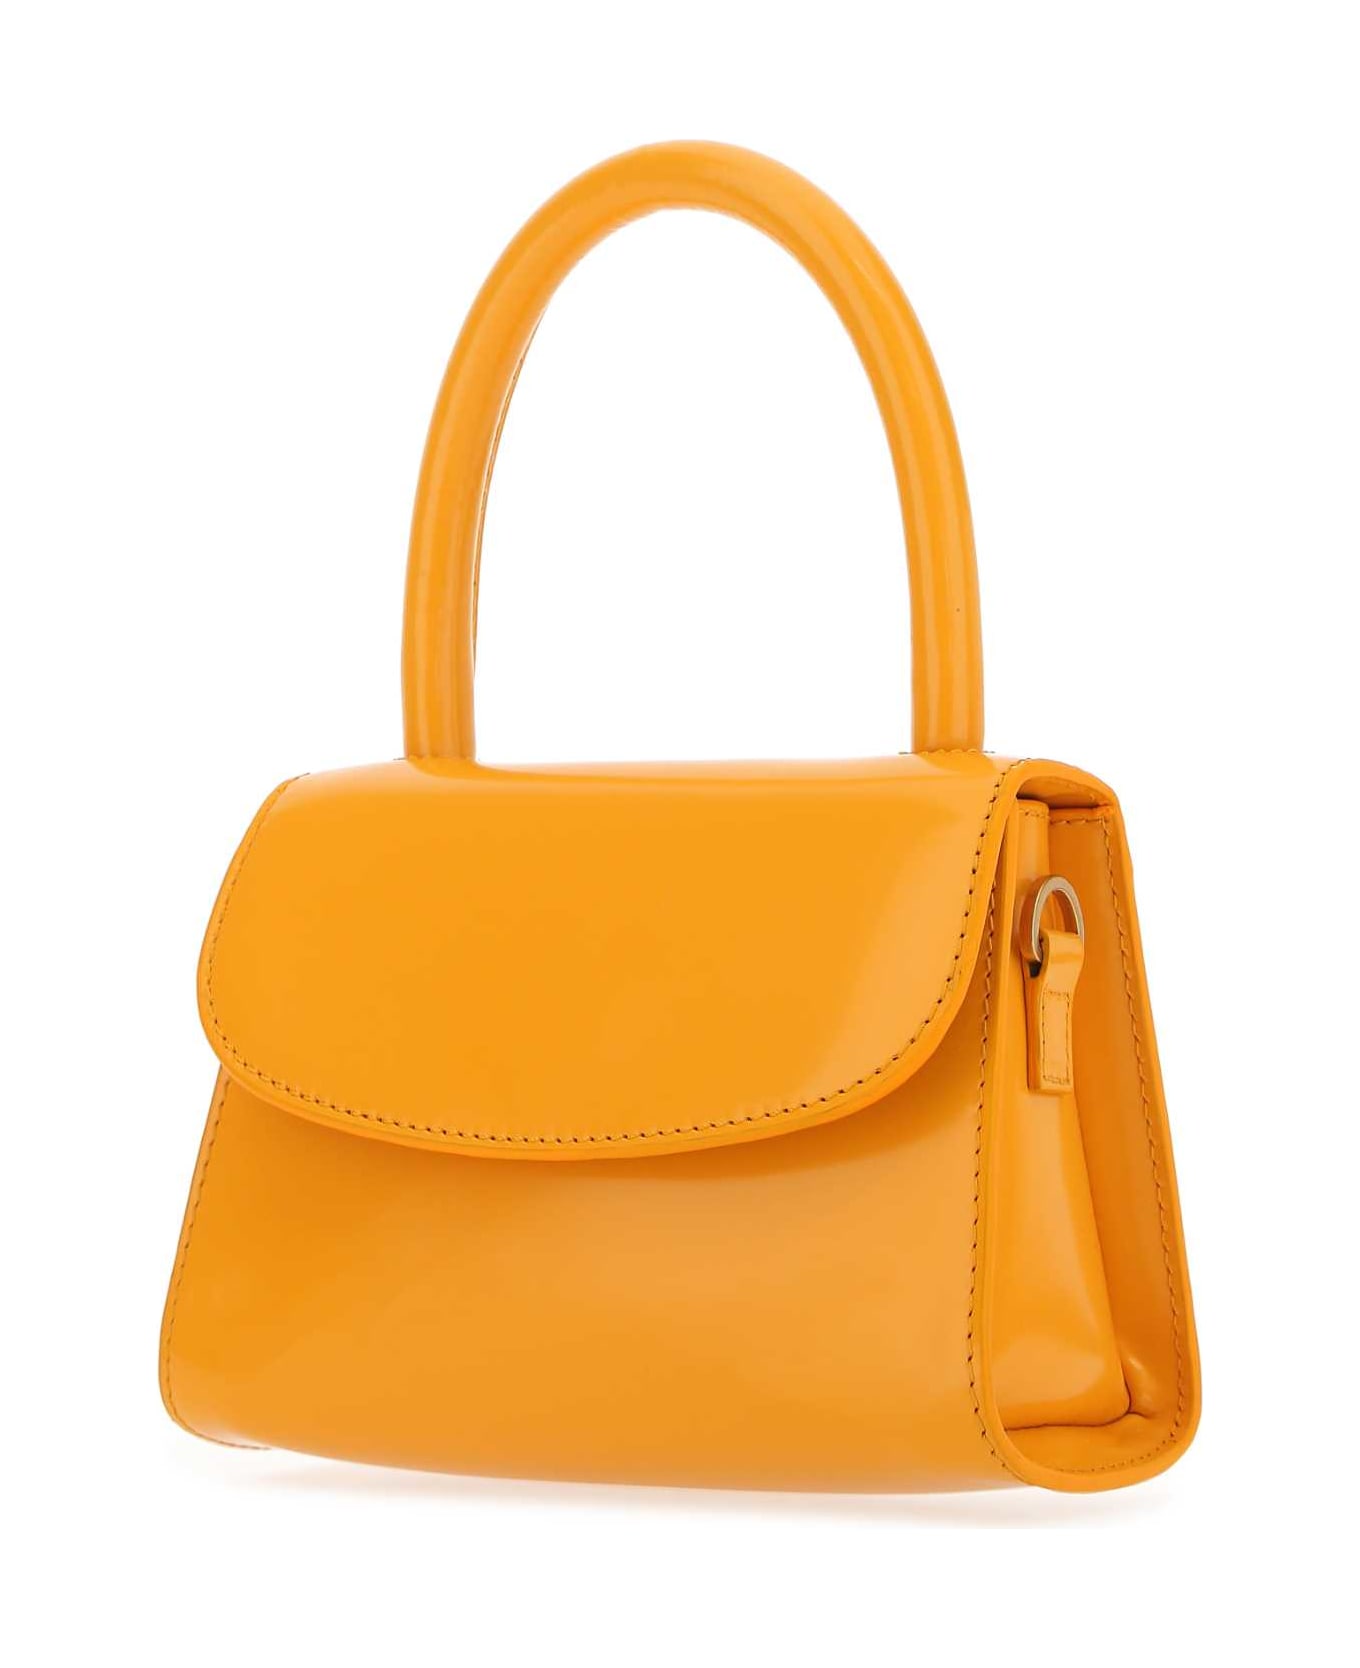 BY FAR Orange Leather Mini Handbag - SUNFLOWER